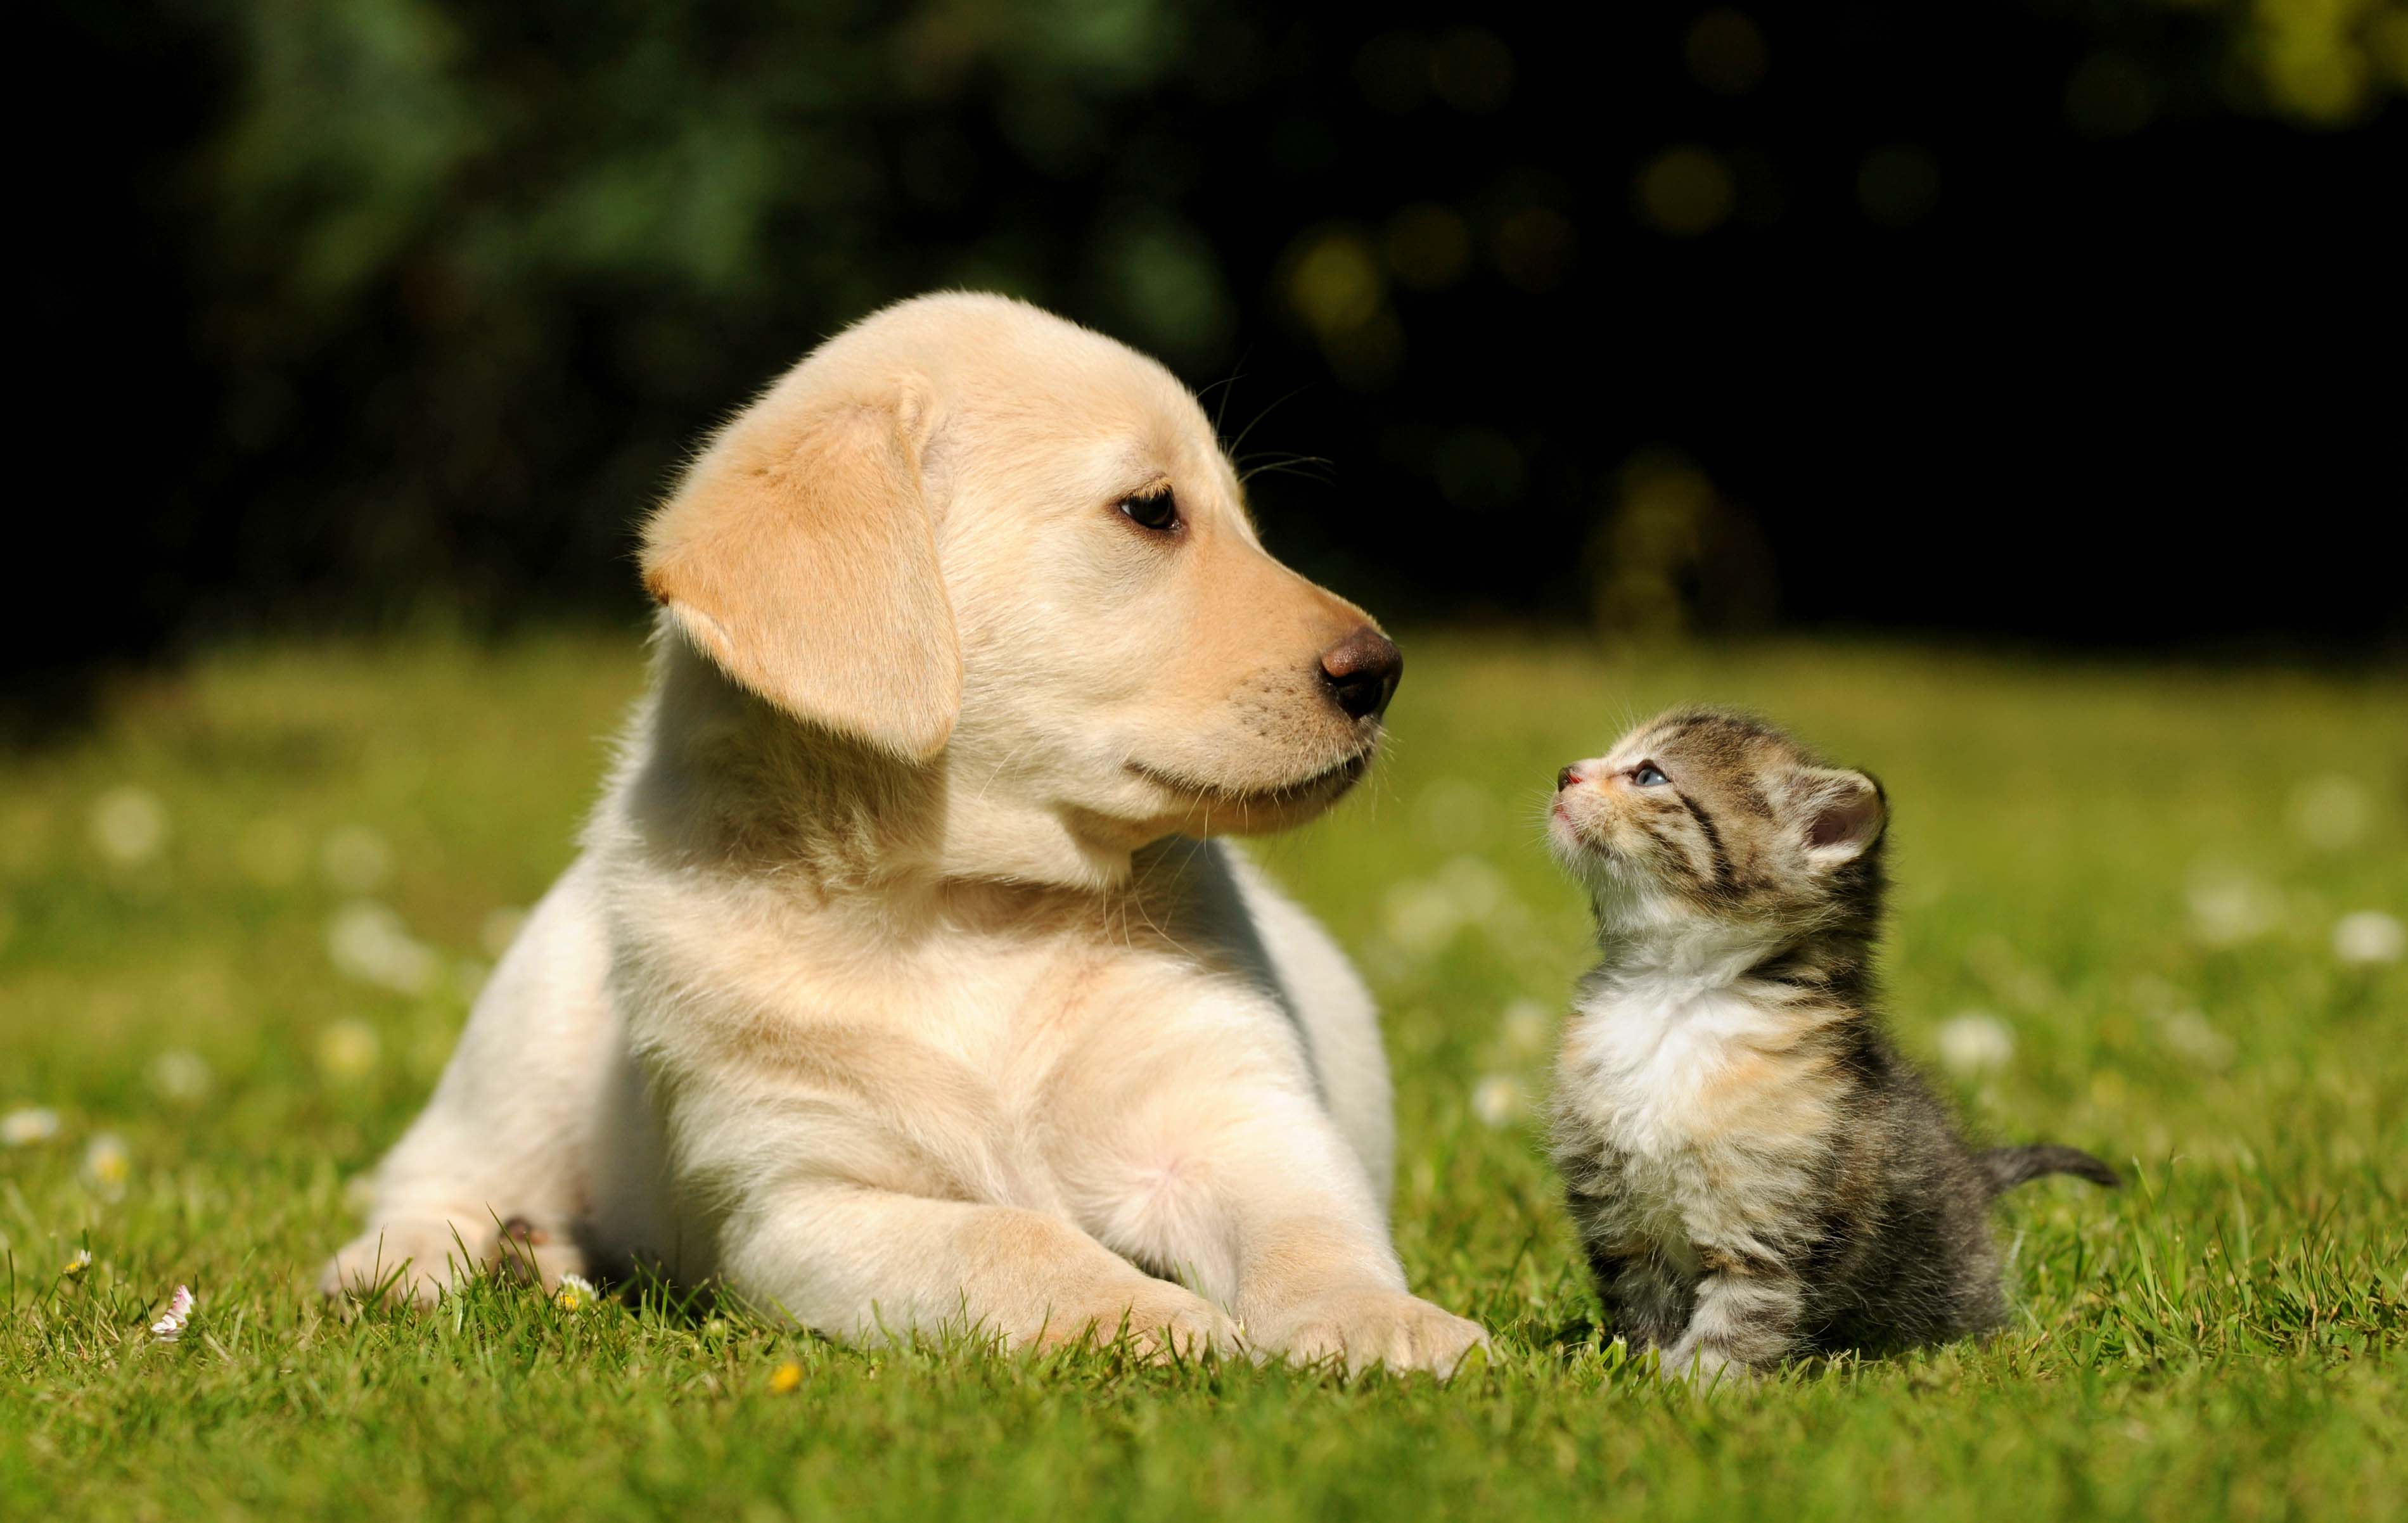 Cat and Dog Desktop Wallpapers - Top Free Cat and Dog Desktop Backgrounds - WallpaperAccess